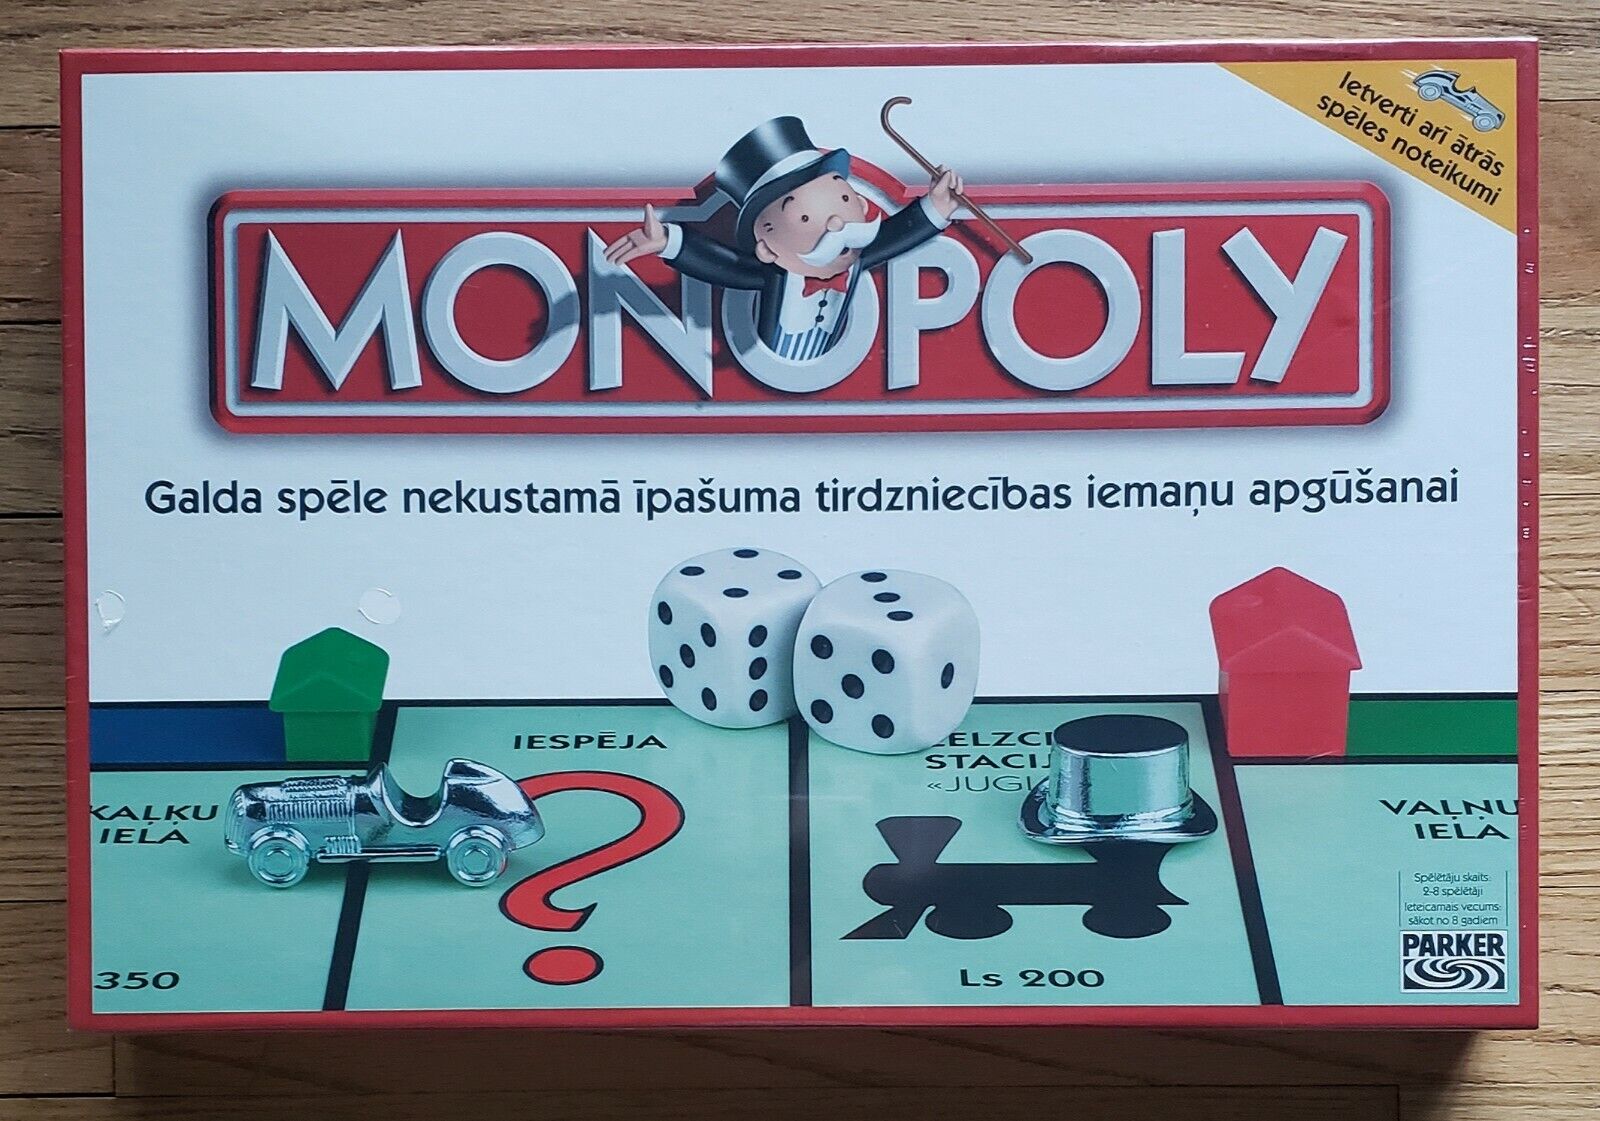 NEW Monopoly LATVIA Edition in Latvian Language 2004 Game Brand New Sealed NIB